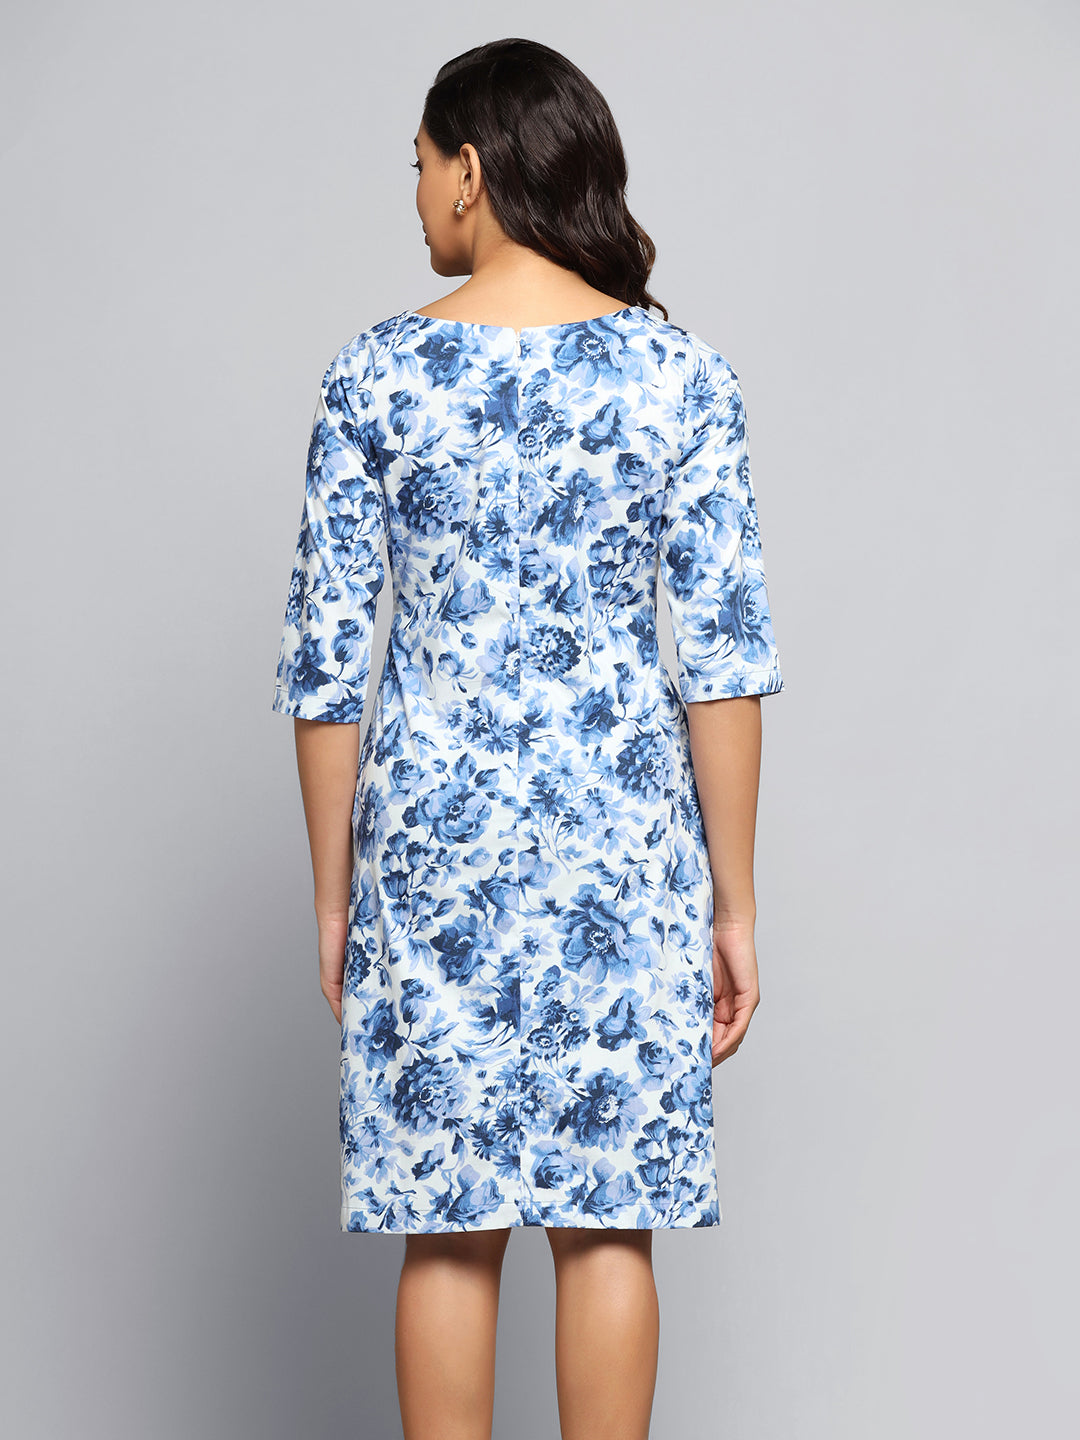 Cotton Printed Premsetu Sky Blue Women A Line Dress (PS331) at Rs 999/piece  in Surat